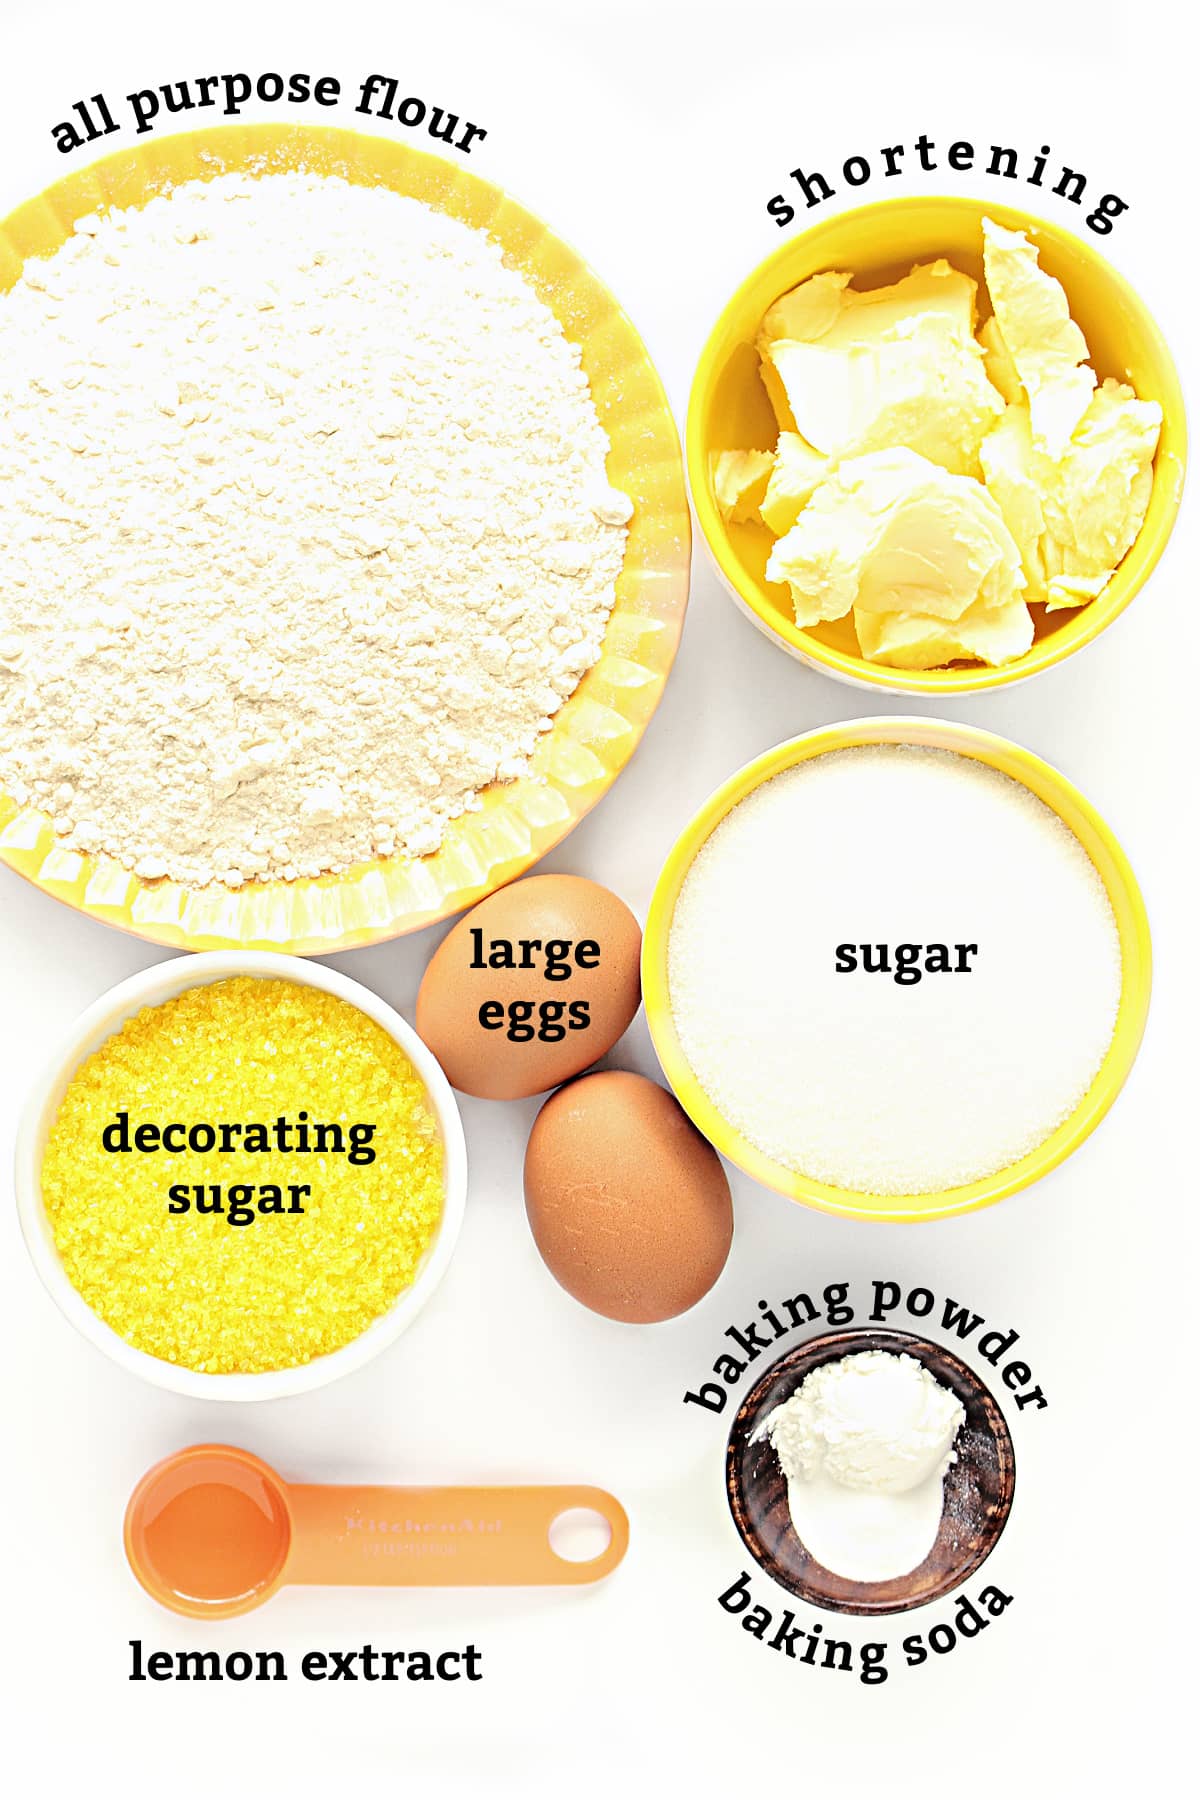 Ingredients labeled: flour, shortening, sugar, eggs, baking powder, baking soda, lemon extract, decorating sugar.